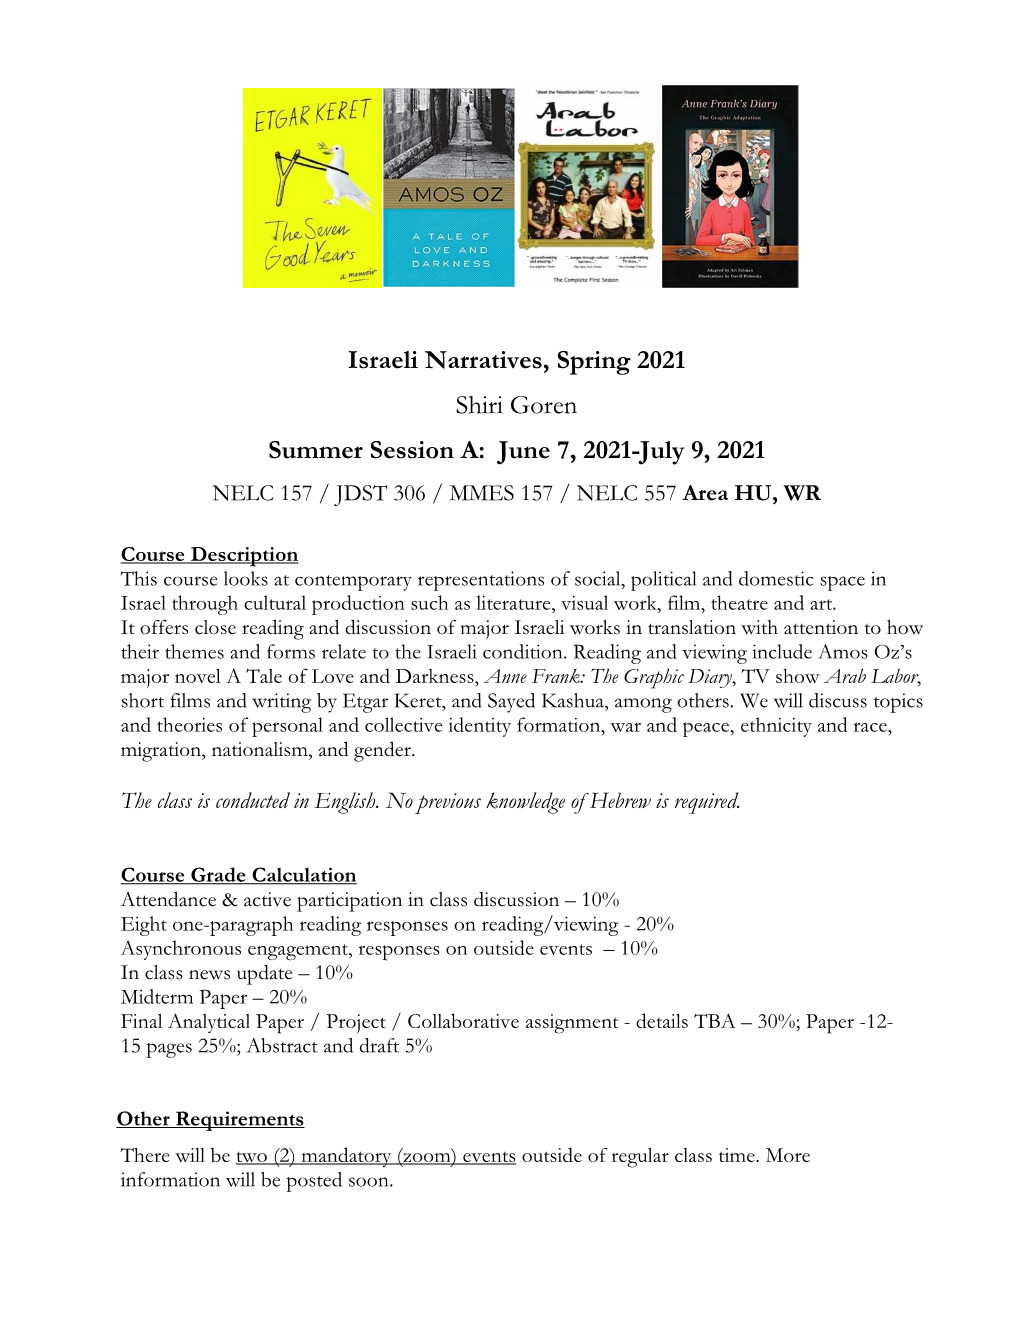 Israeli Narratives, Spring 2021 Shiri Goren Summer Session A: June 7, 2021-July 9, 2021 NELC 157 / JDST 306 / MMES 157 / NELC 557 Area HU, WR